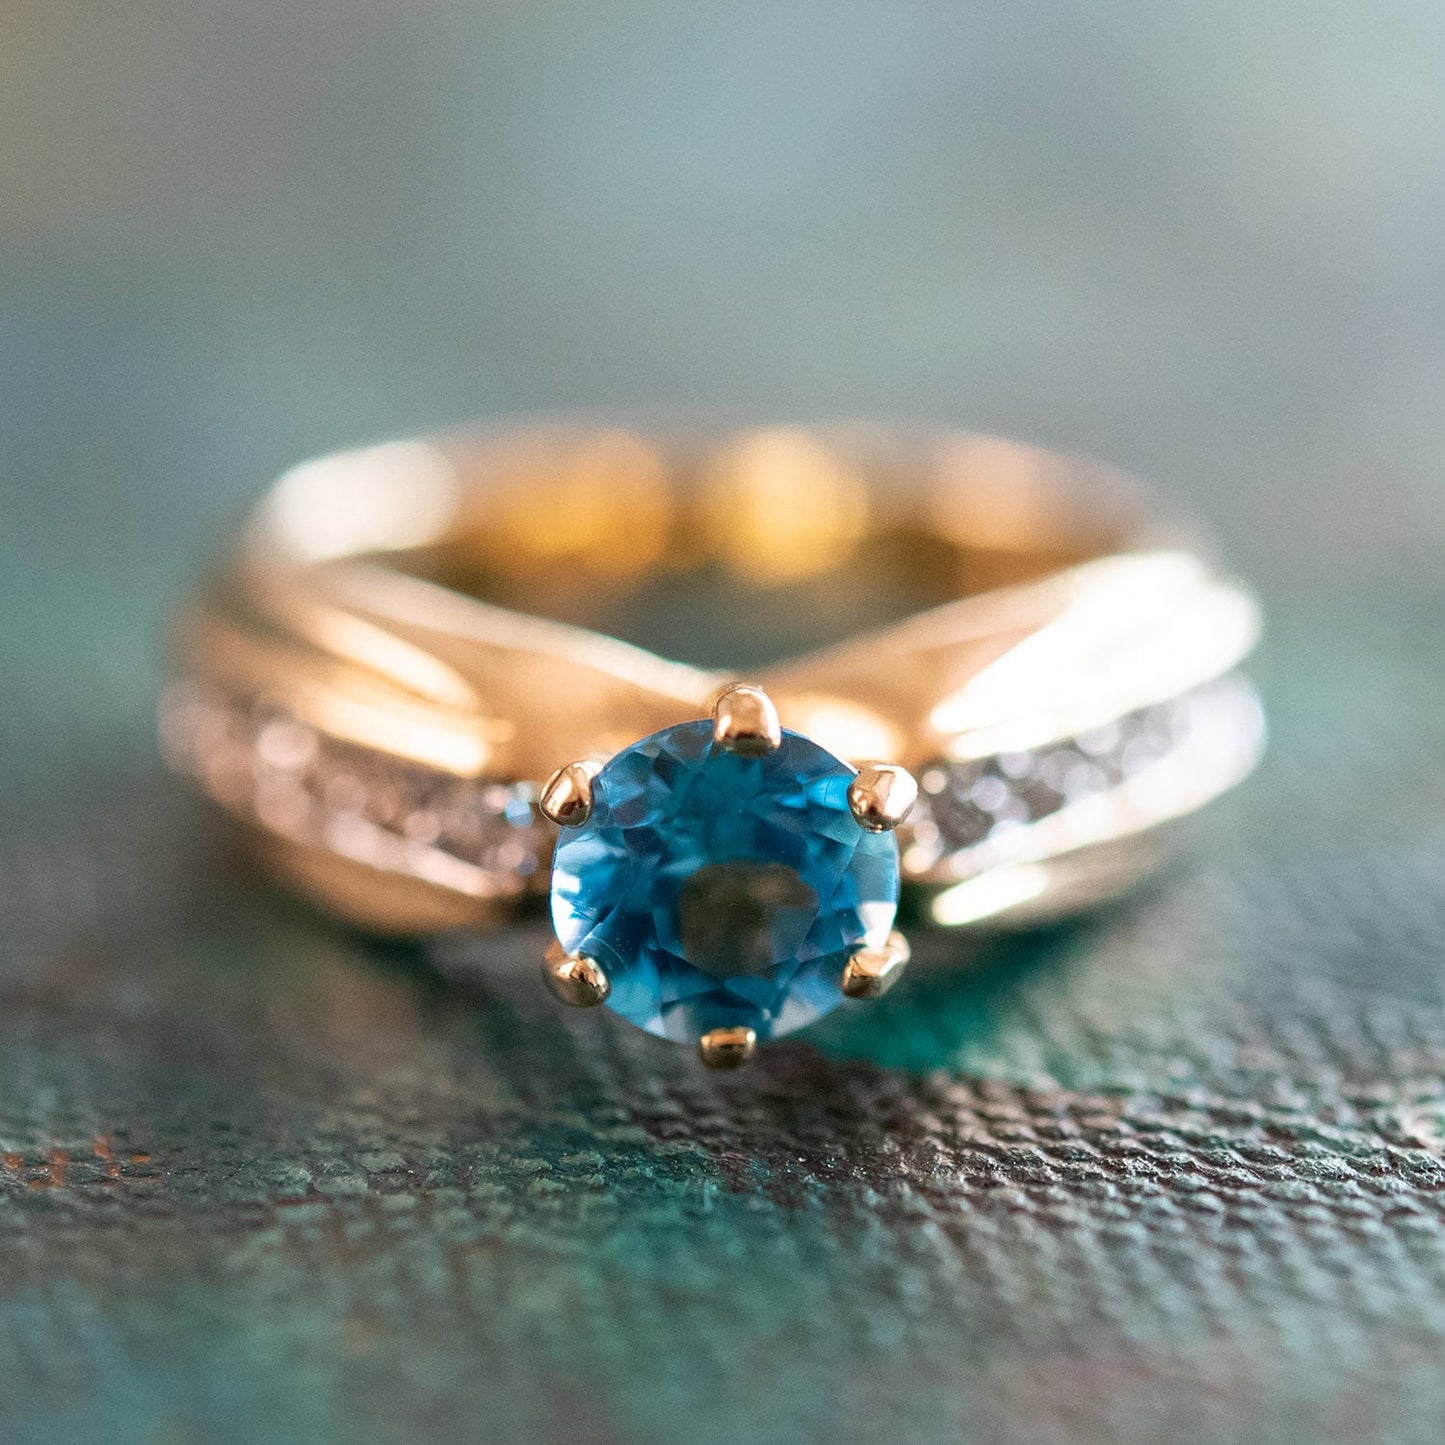 Vintage Ring Genuine Blue Topaz and Clear Swarovski Crystals 18kt Gold Plated R2736 Size: 7